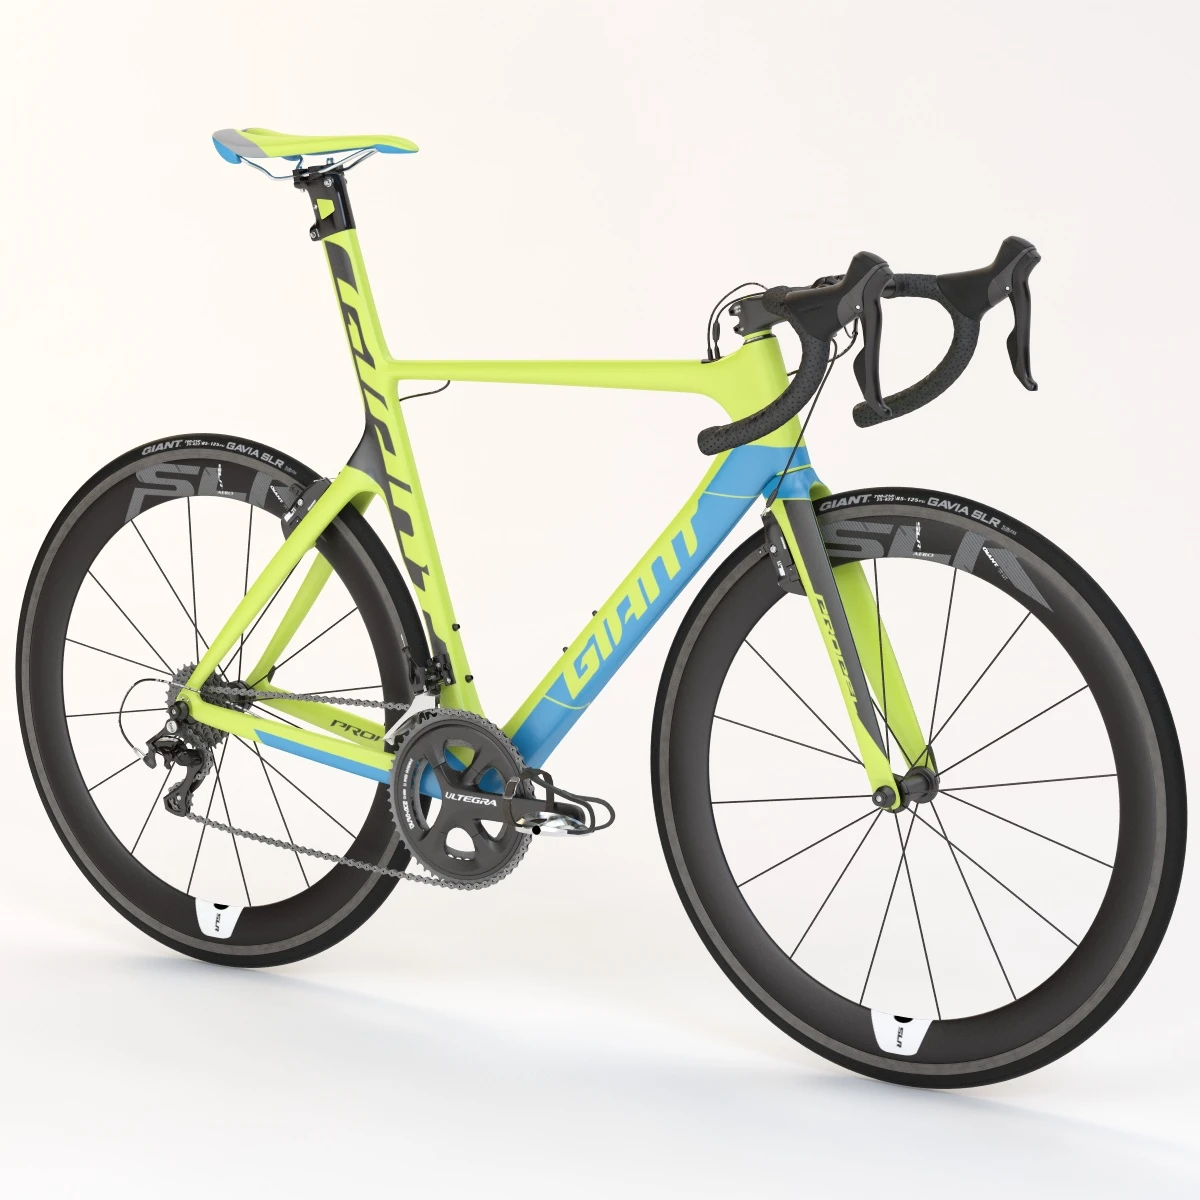 Giant Propel Advanced Sl-2 Green-Blue Lightweight Sprinter Bicycle 3D Model_01